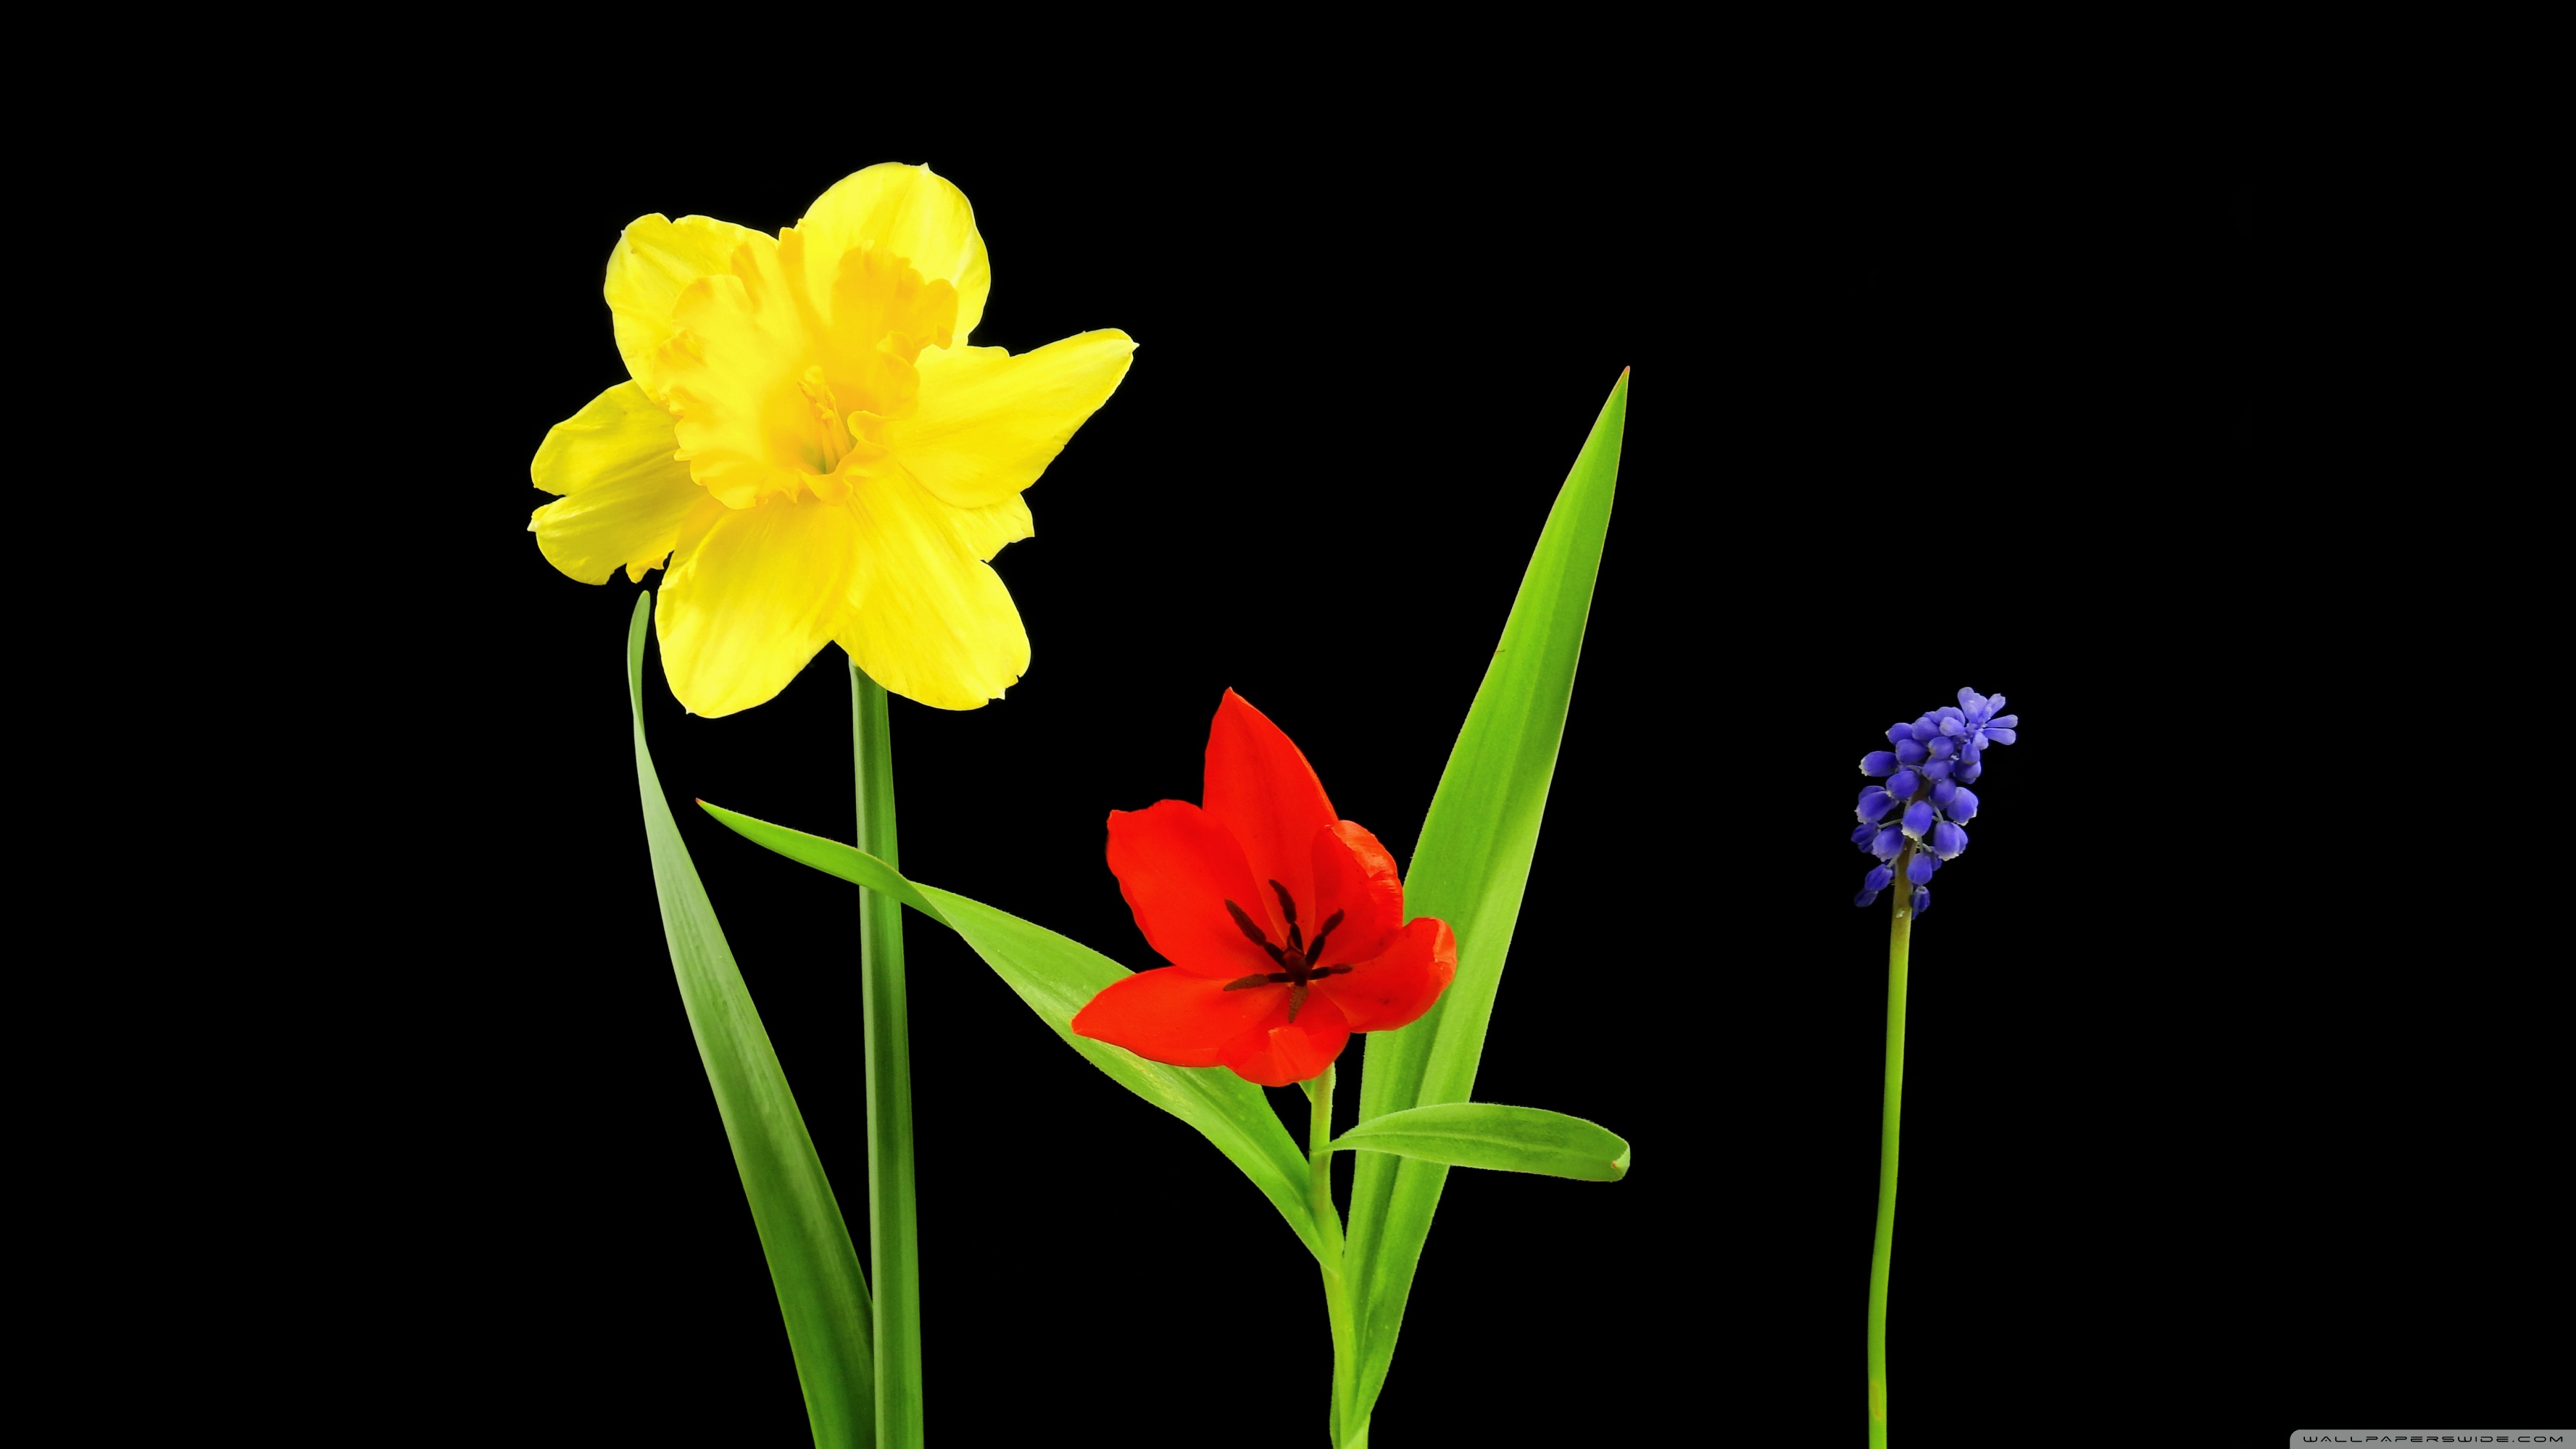 Spring Flowers Daffodil Tulip Muscari Black Background Ultra Hd Desktop Background Wallpaper For 4k Uhd Tv Widescreen Ultrawide Desktop Laptop Multi Display Dual Monitor Tablet Smartphone